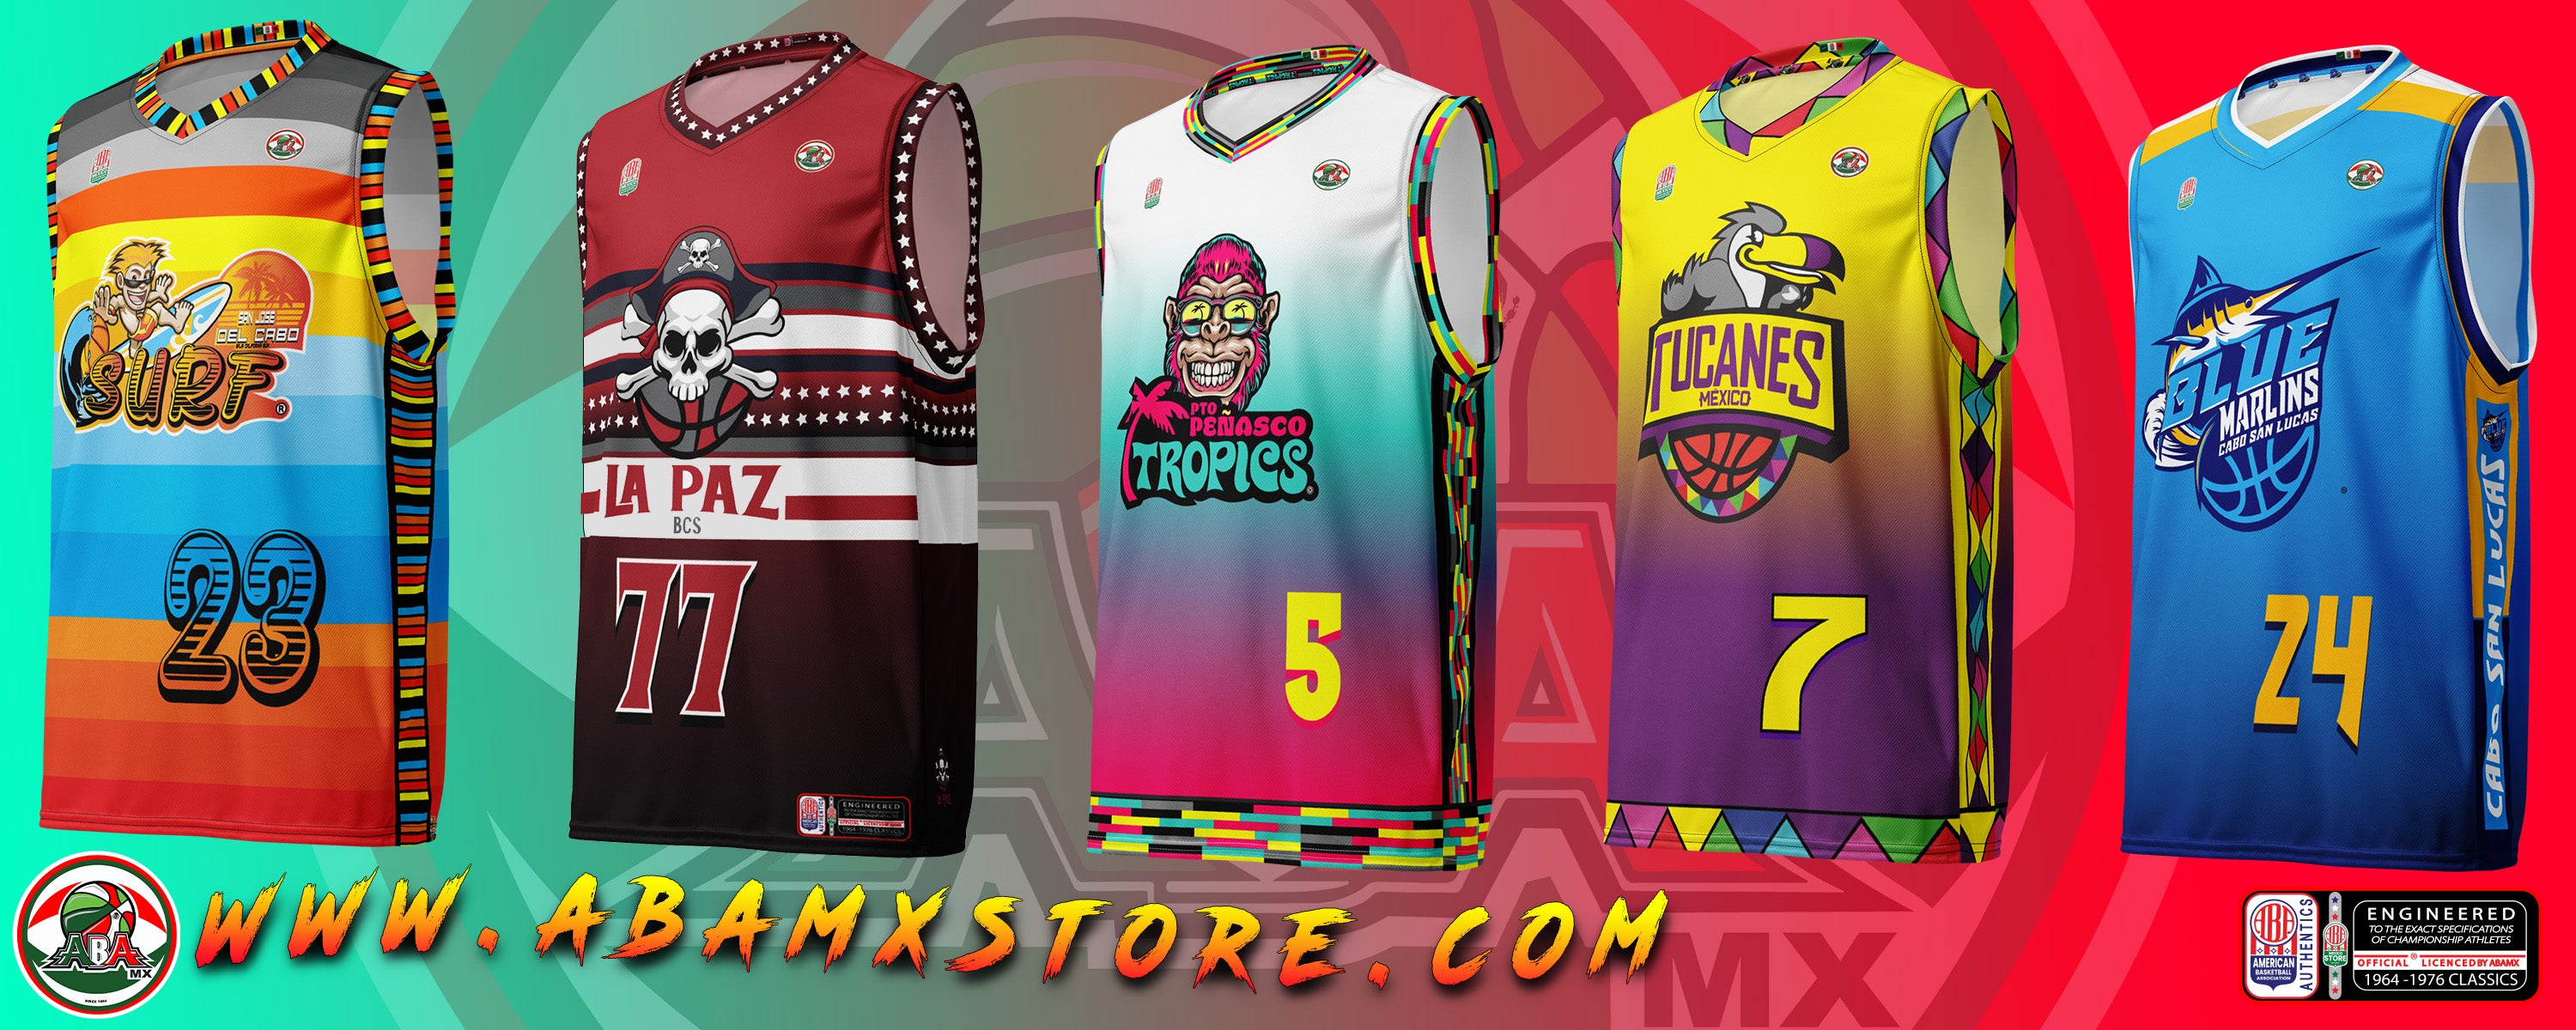 Tricolor Basketball jersey - Sublimation Basketball team uniform